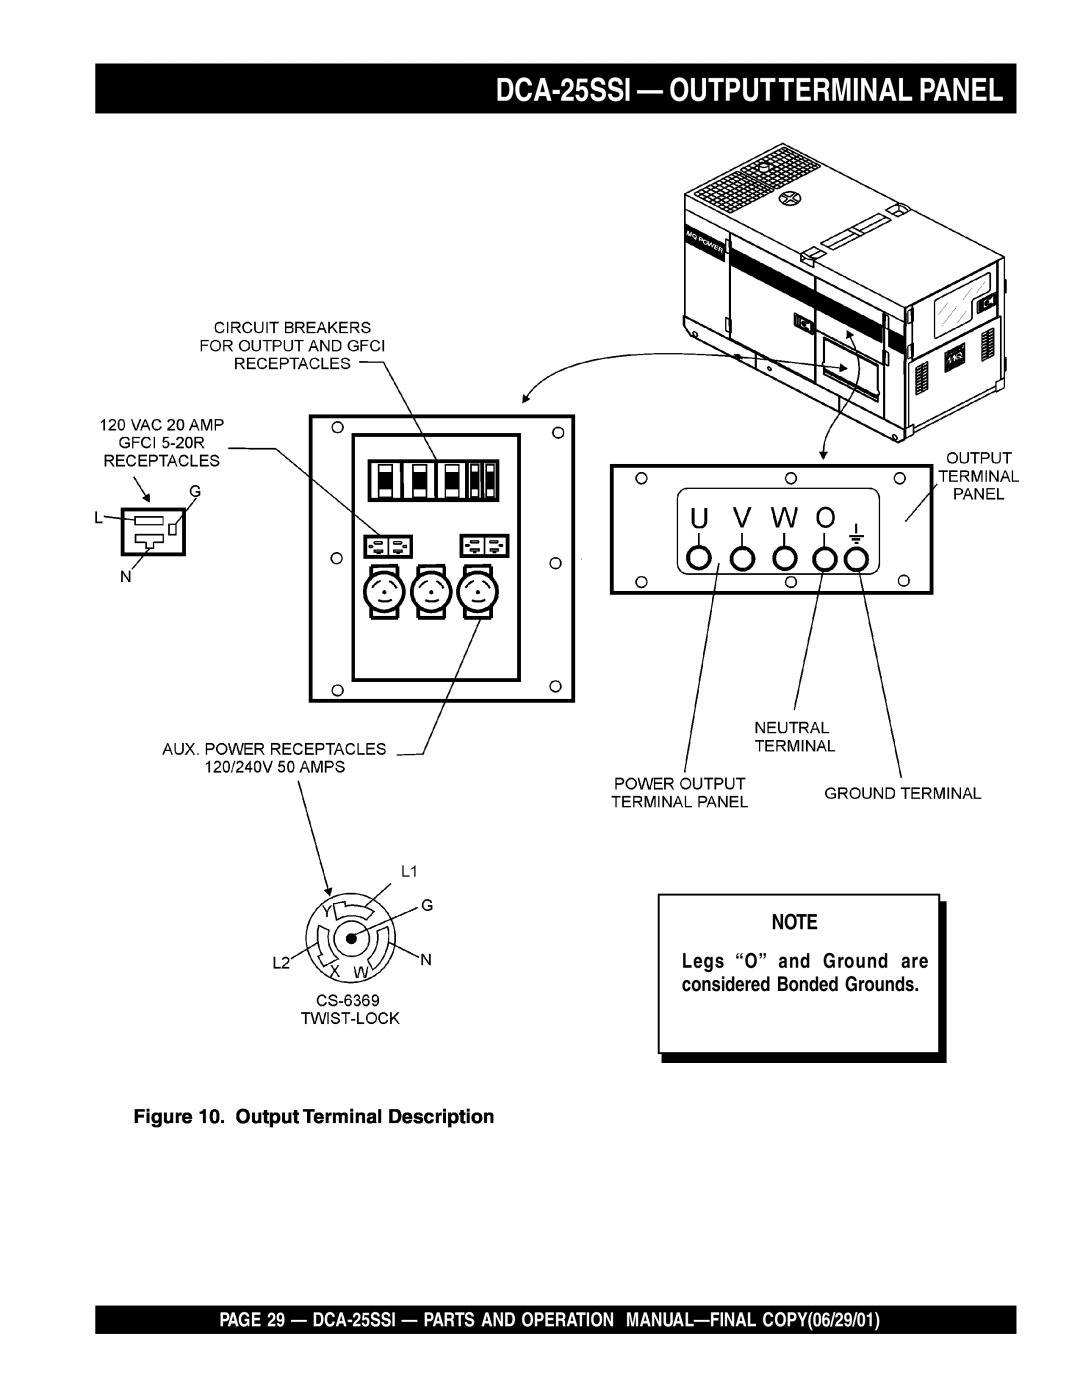 Multiquip operation manual DCA-25SSI— OUTPUTTERMINAL PANEL, Output Terminal Description 